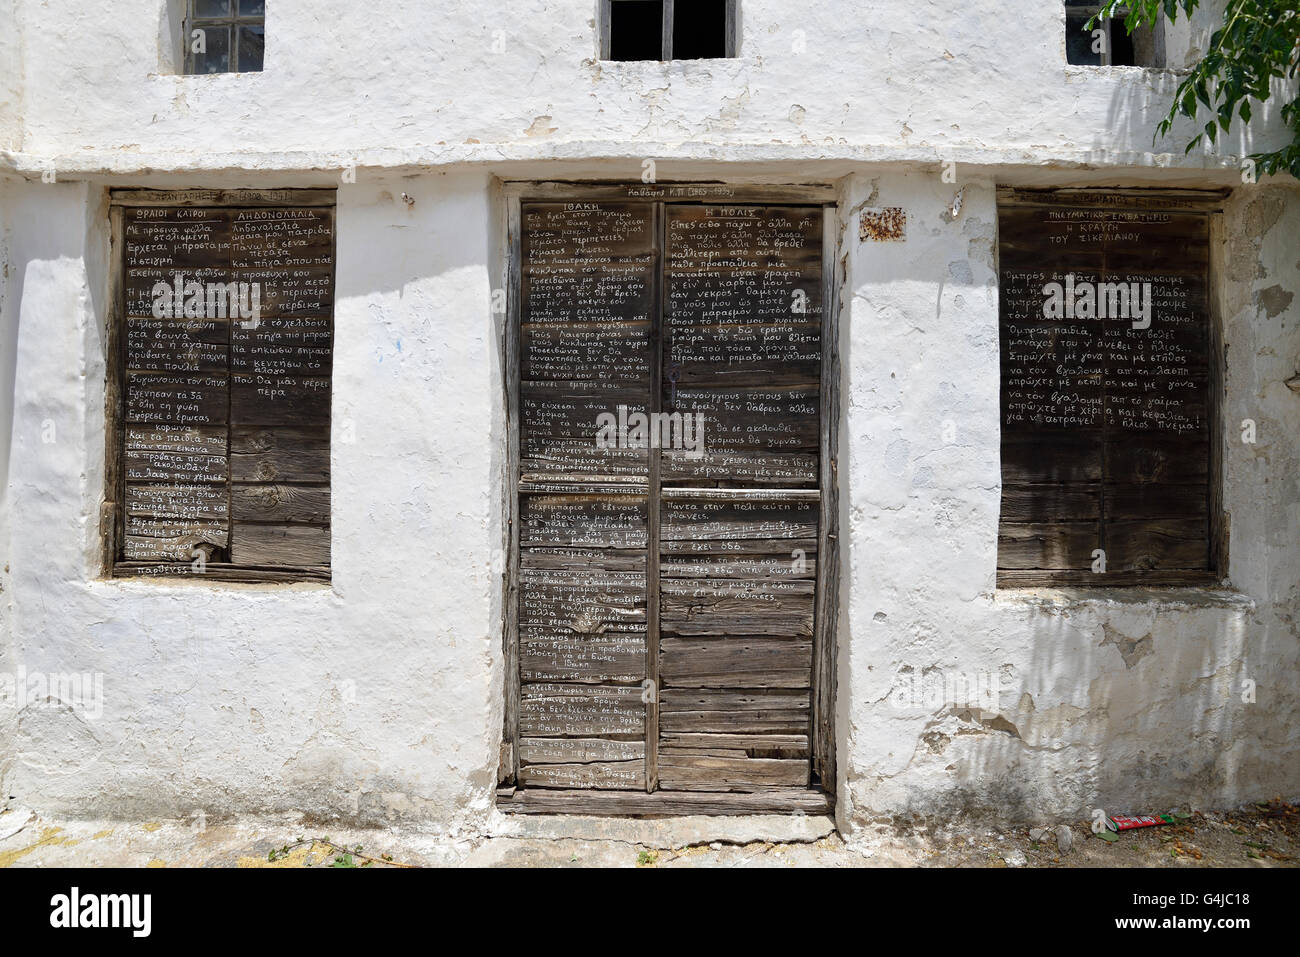 Poems written on door and windows in Pyrgos village, Tinos island, Greece  Stock Photo - Alamy